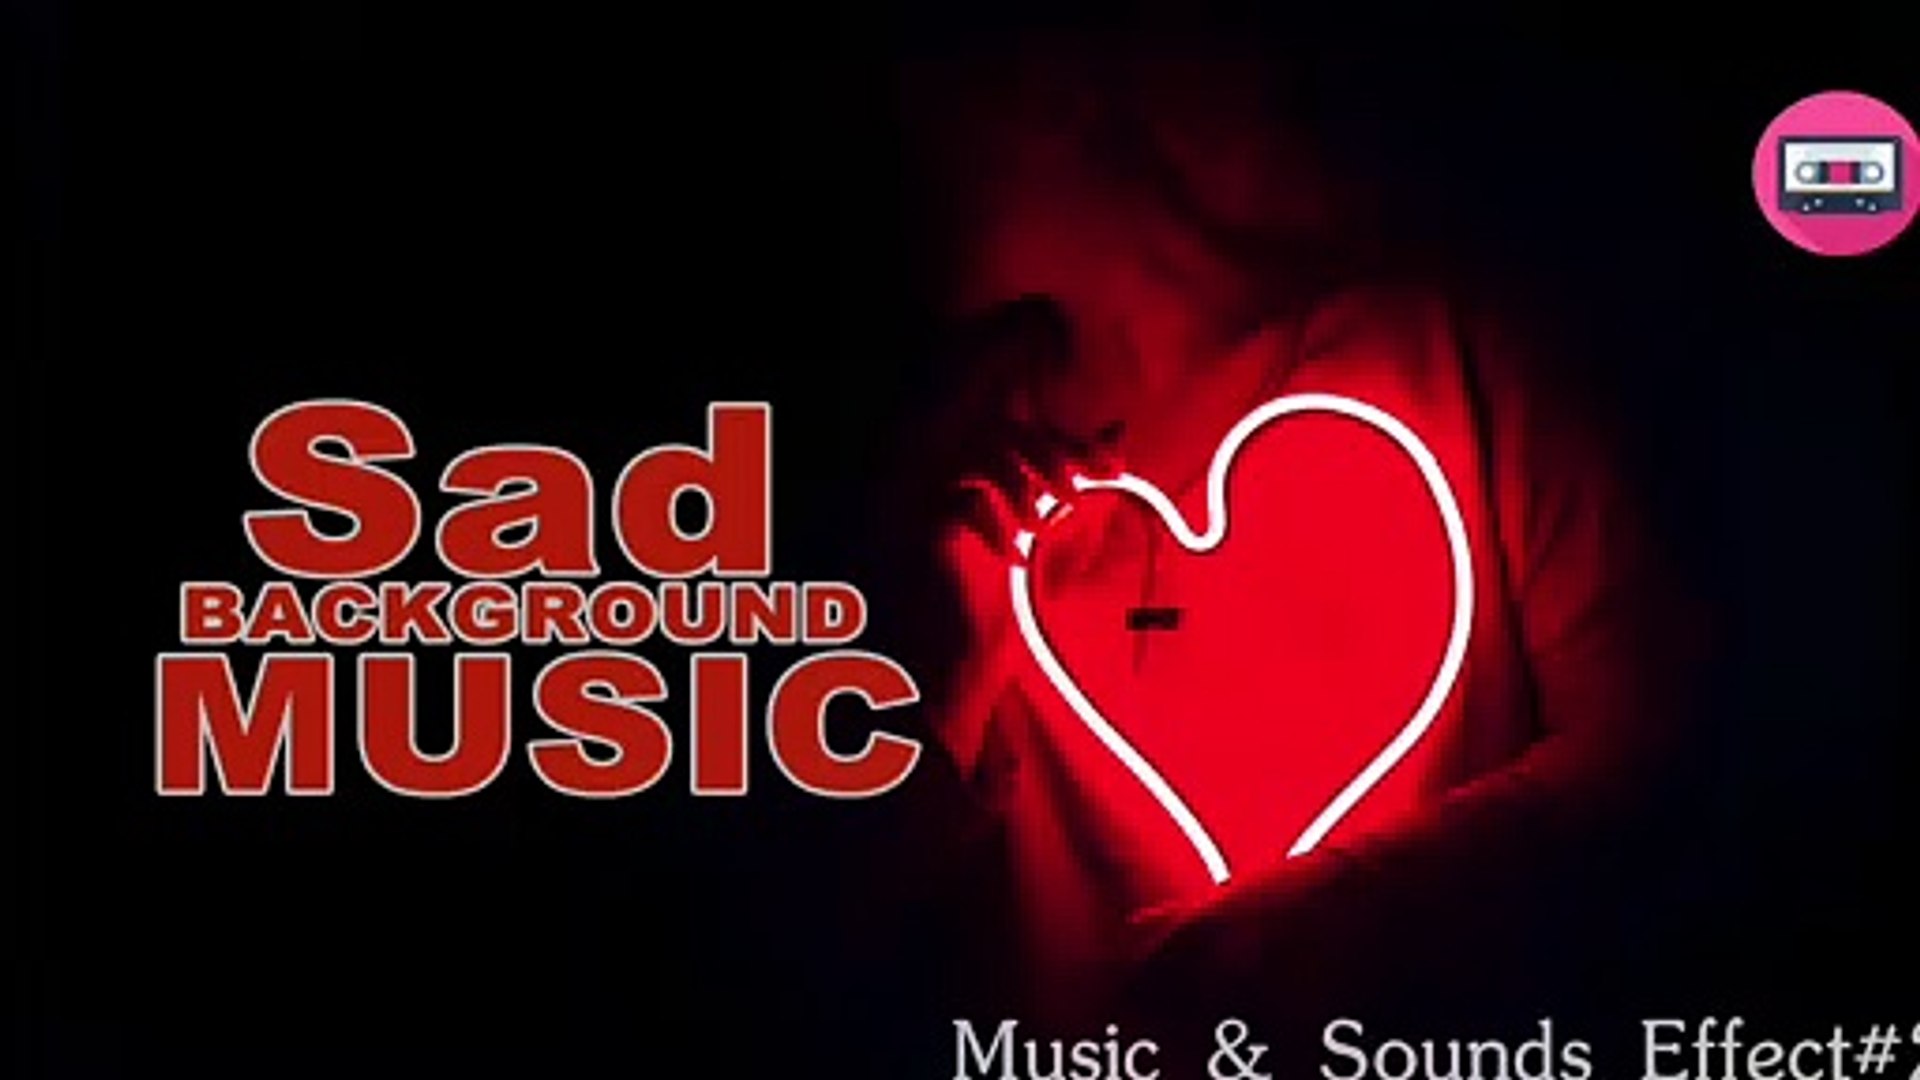 Sad BACKGROUND Music 3 Cinematic No Copyright Background Music For Youtube Videos | Copyright Free M